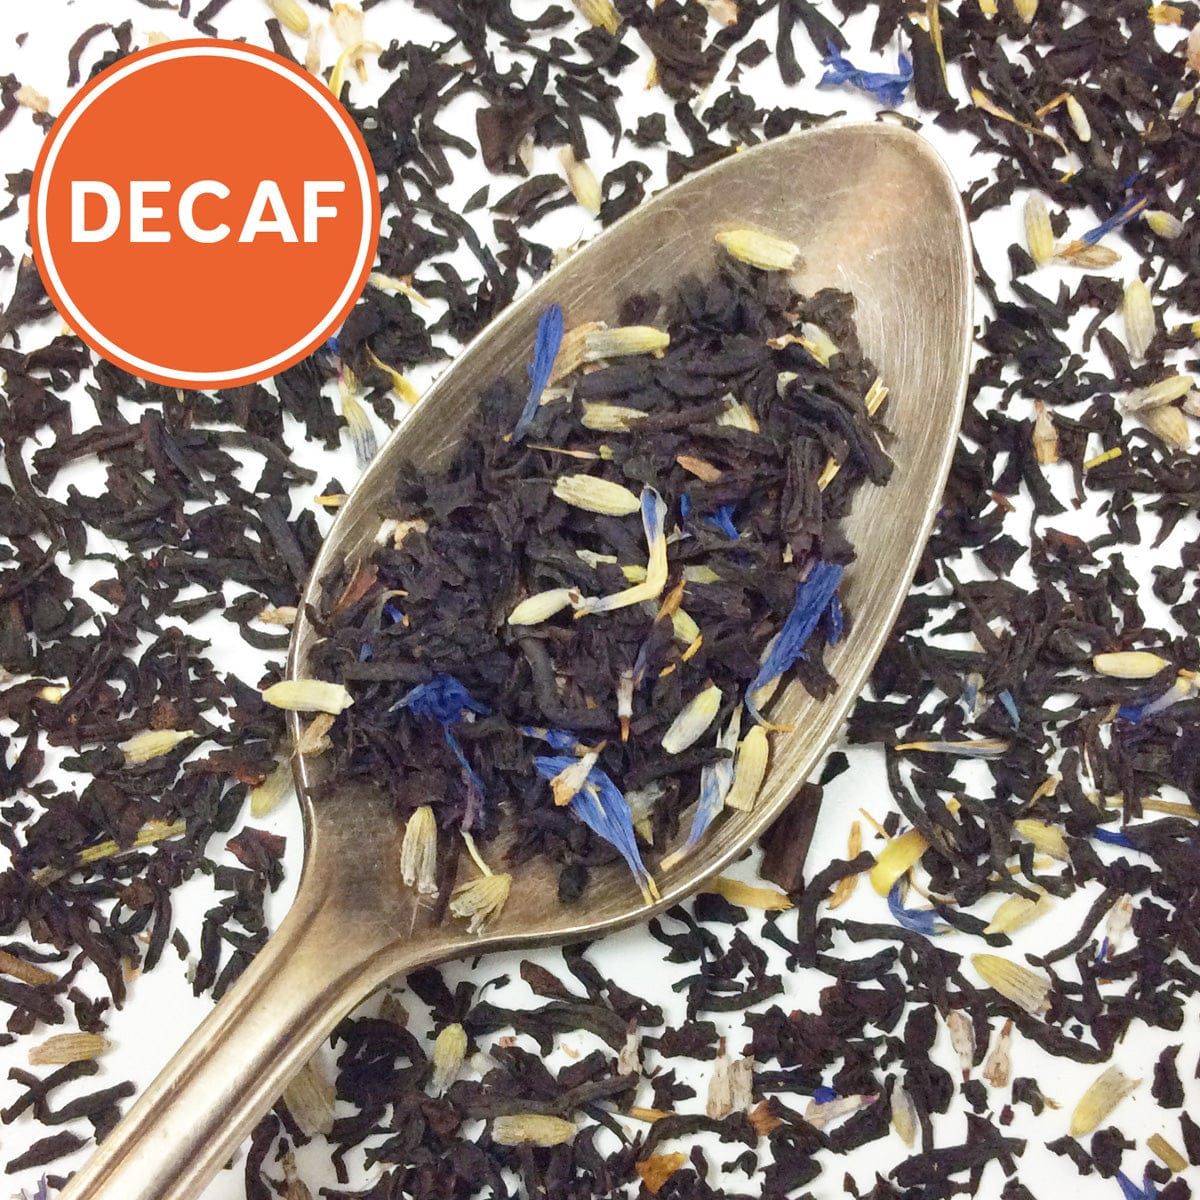 Plum Deluxe Tea Decaf Delightful Morning Blend (Earl Grey Lavender) by Plum Deluxe Tea